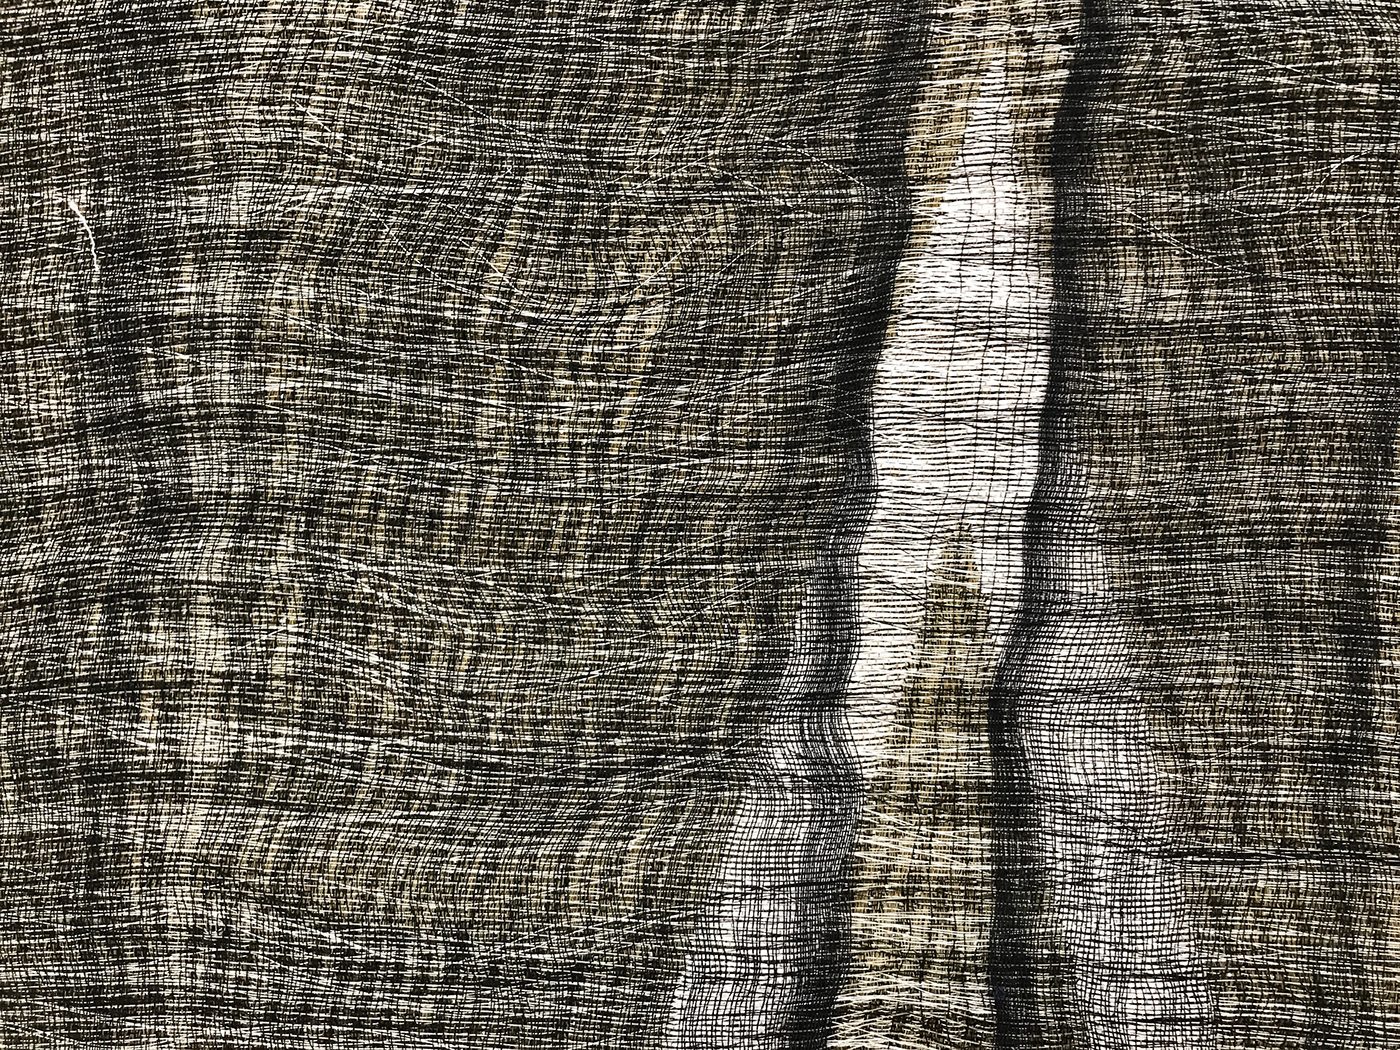 jacquard fabric spatial weaving 3d weaving spatial weaving double weave